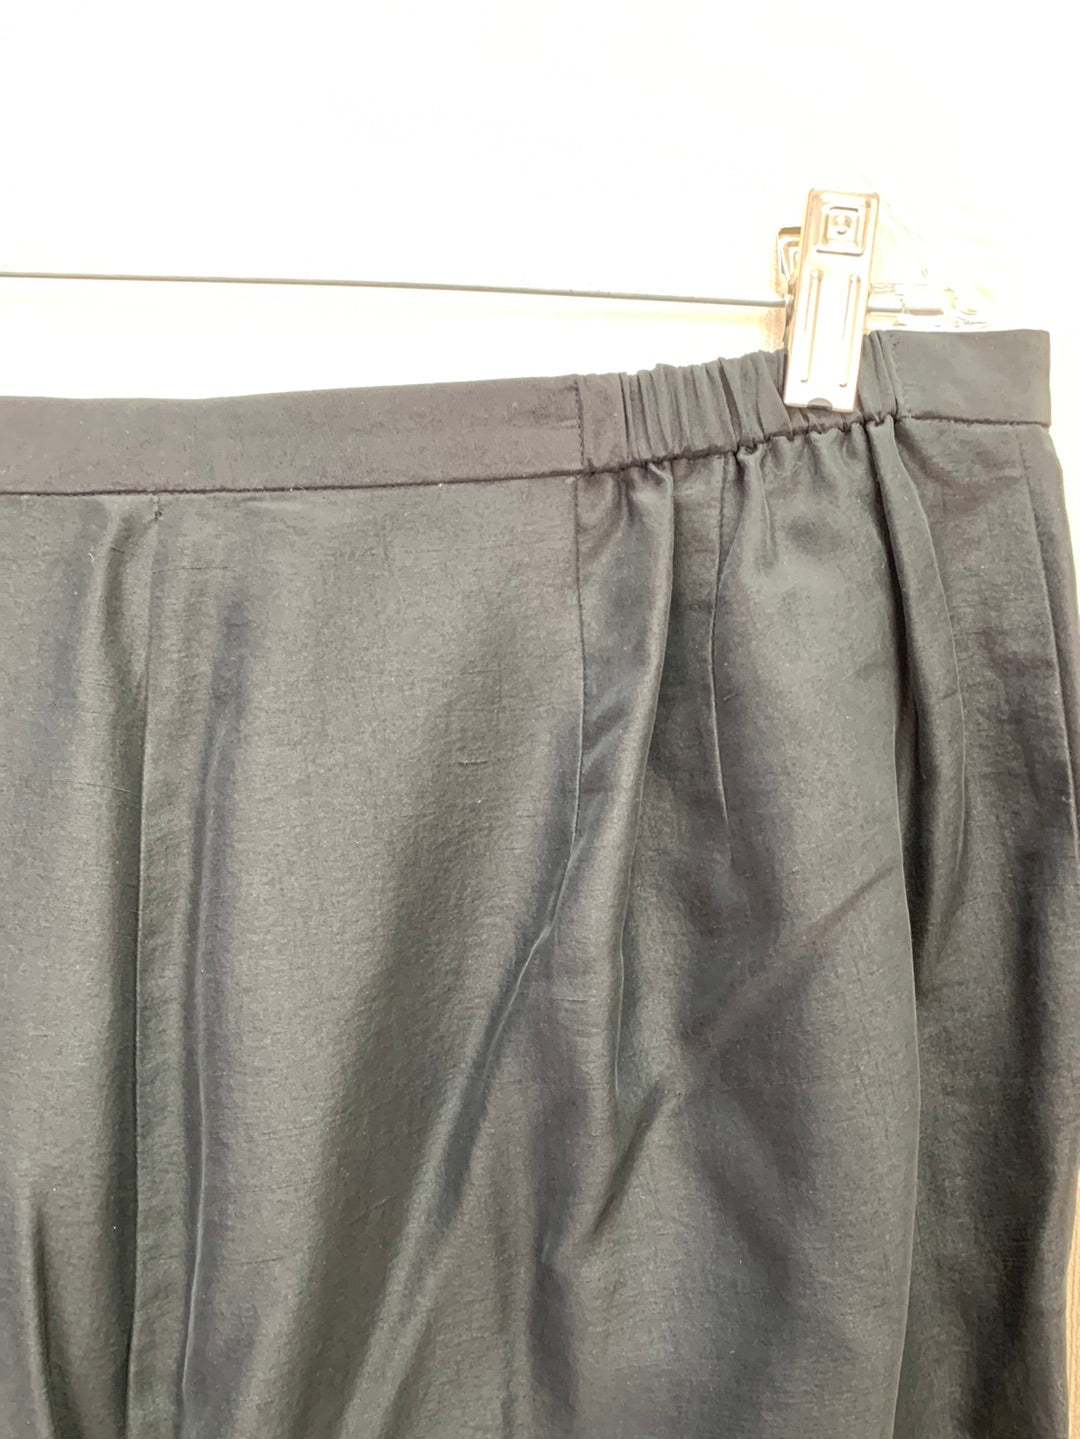 EILEEN FISHER black Washable 100% Silk Dress Pants - 1X